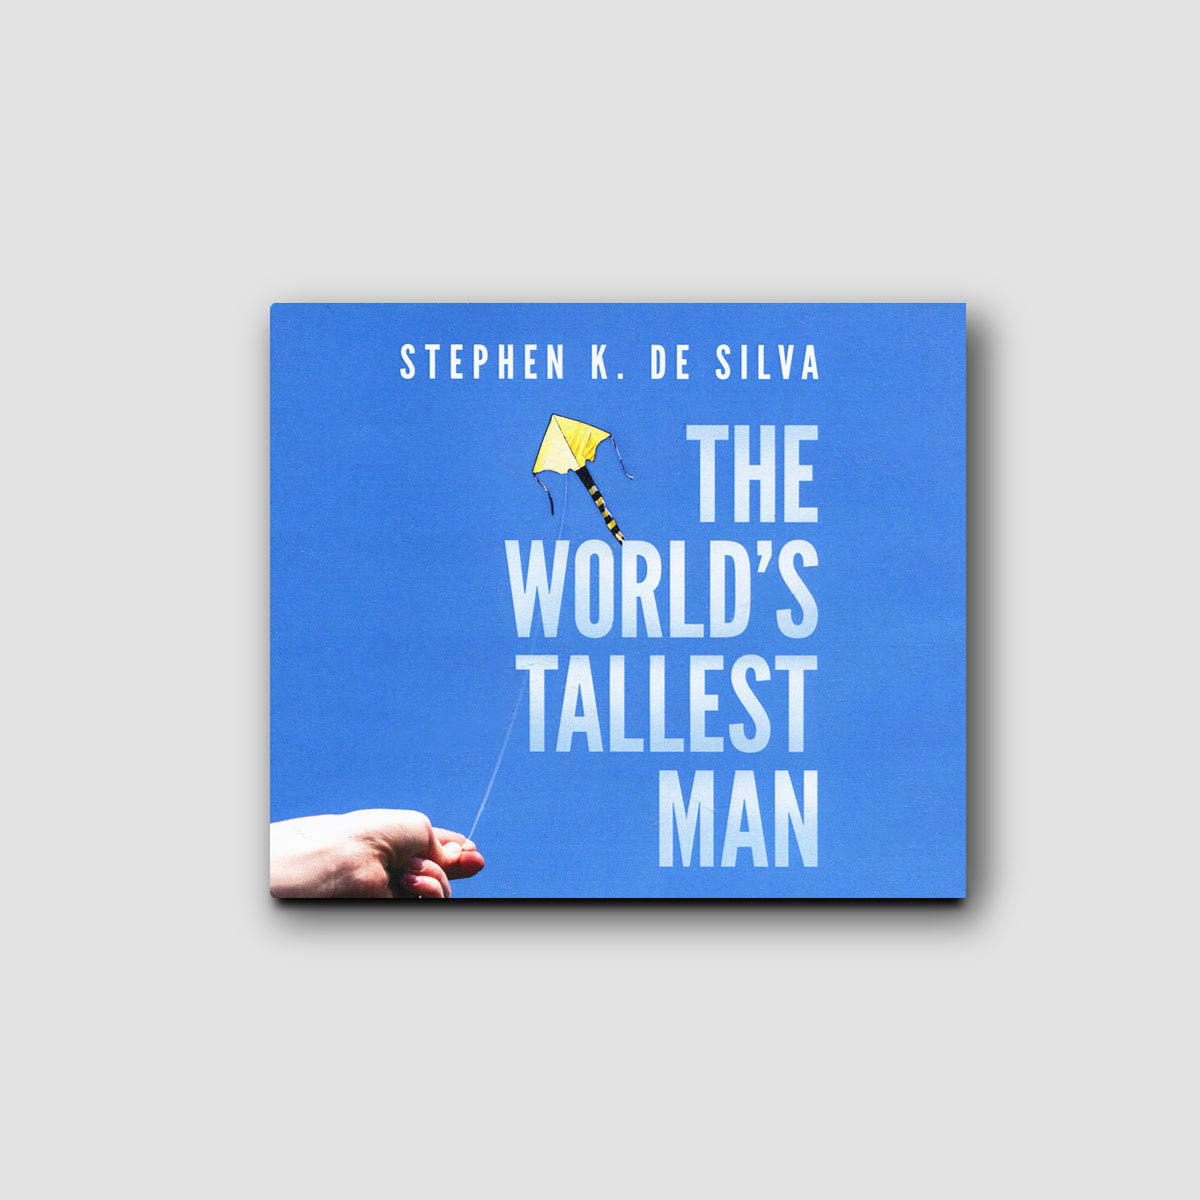 The World's Tallest Man